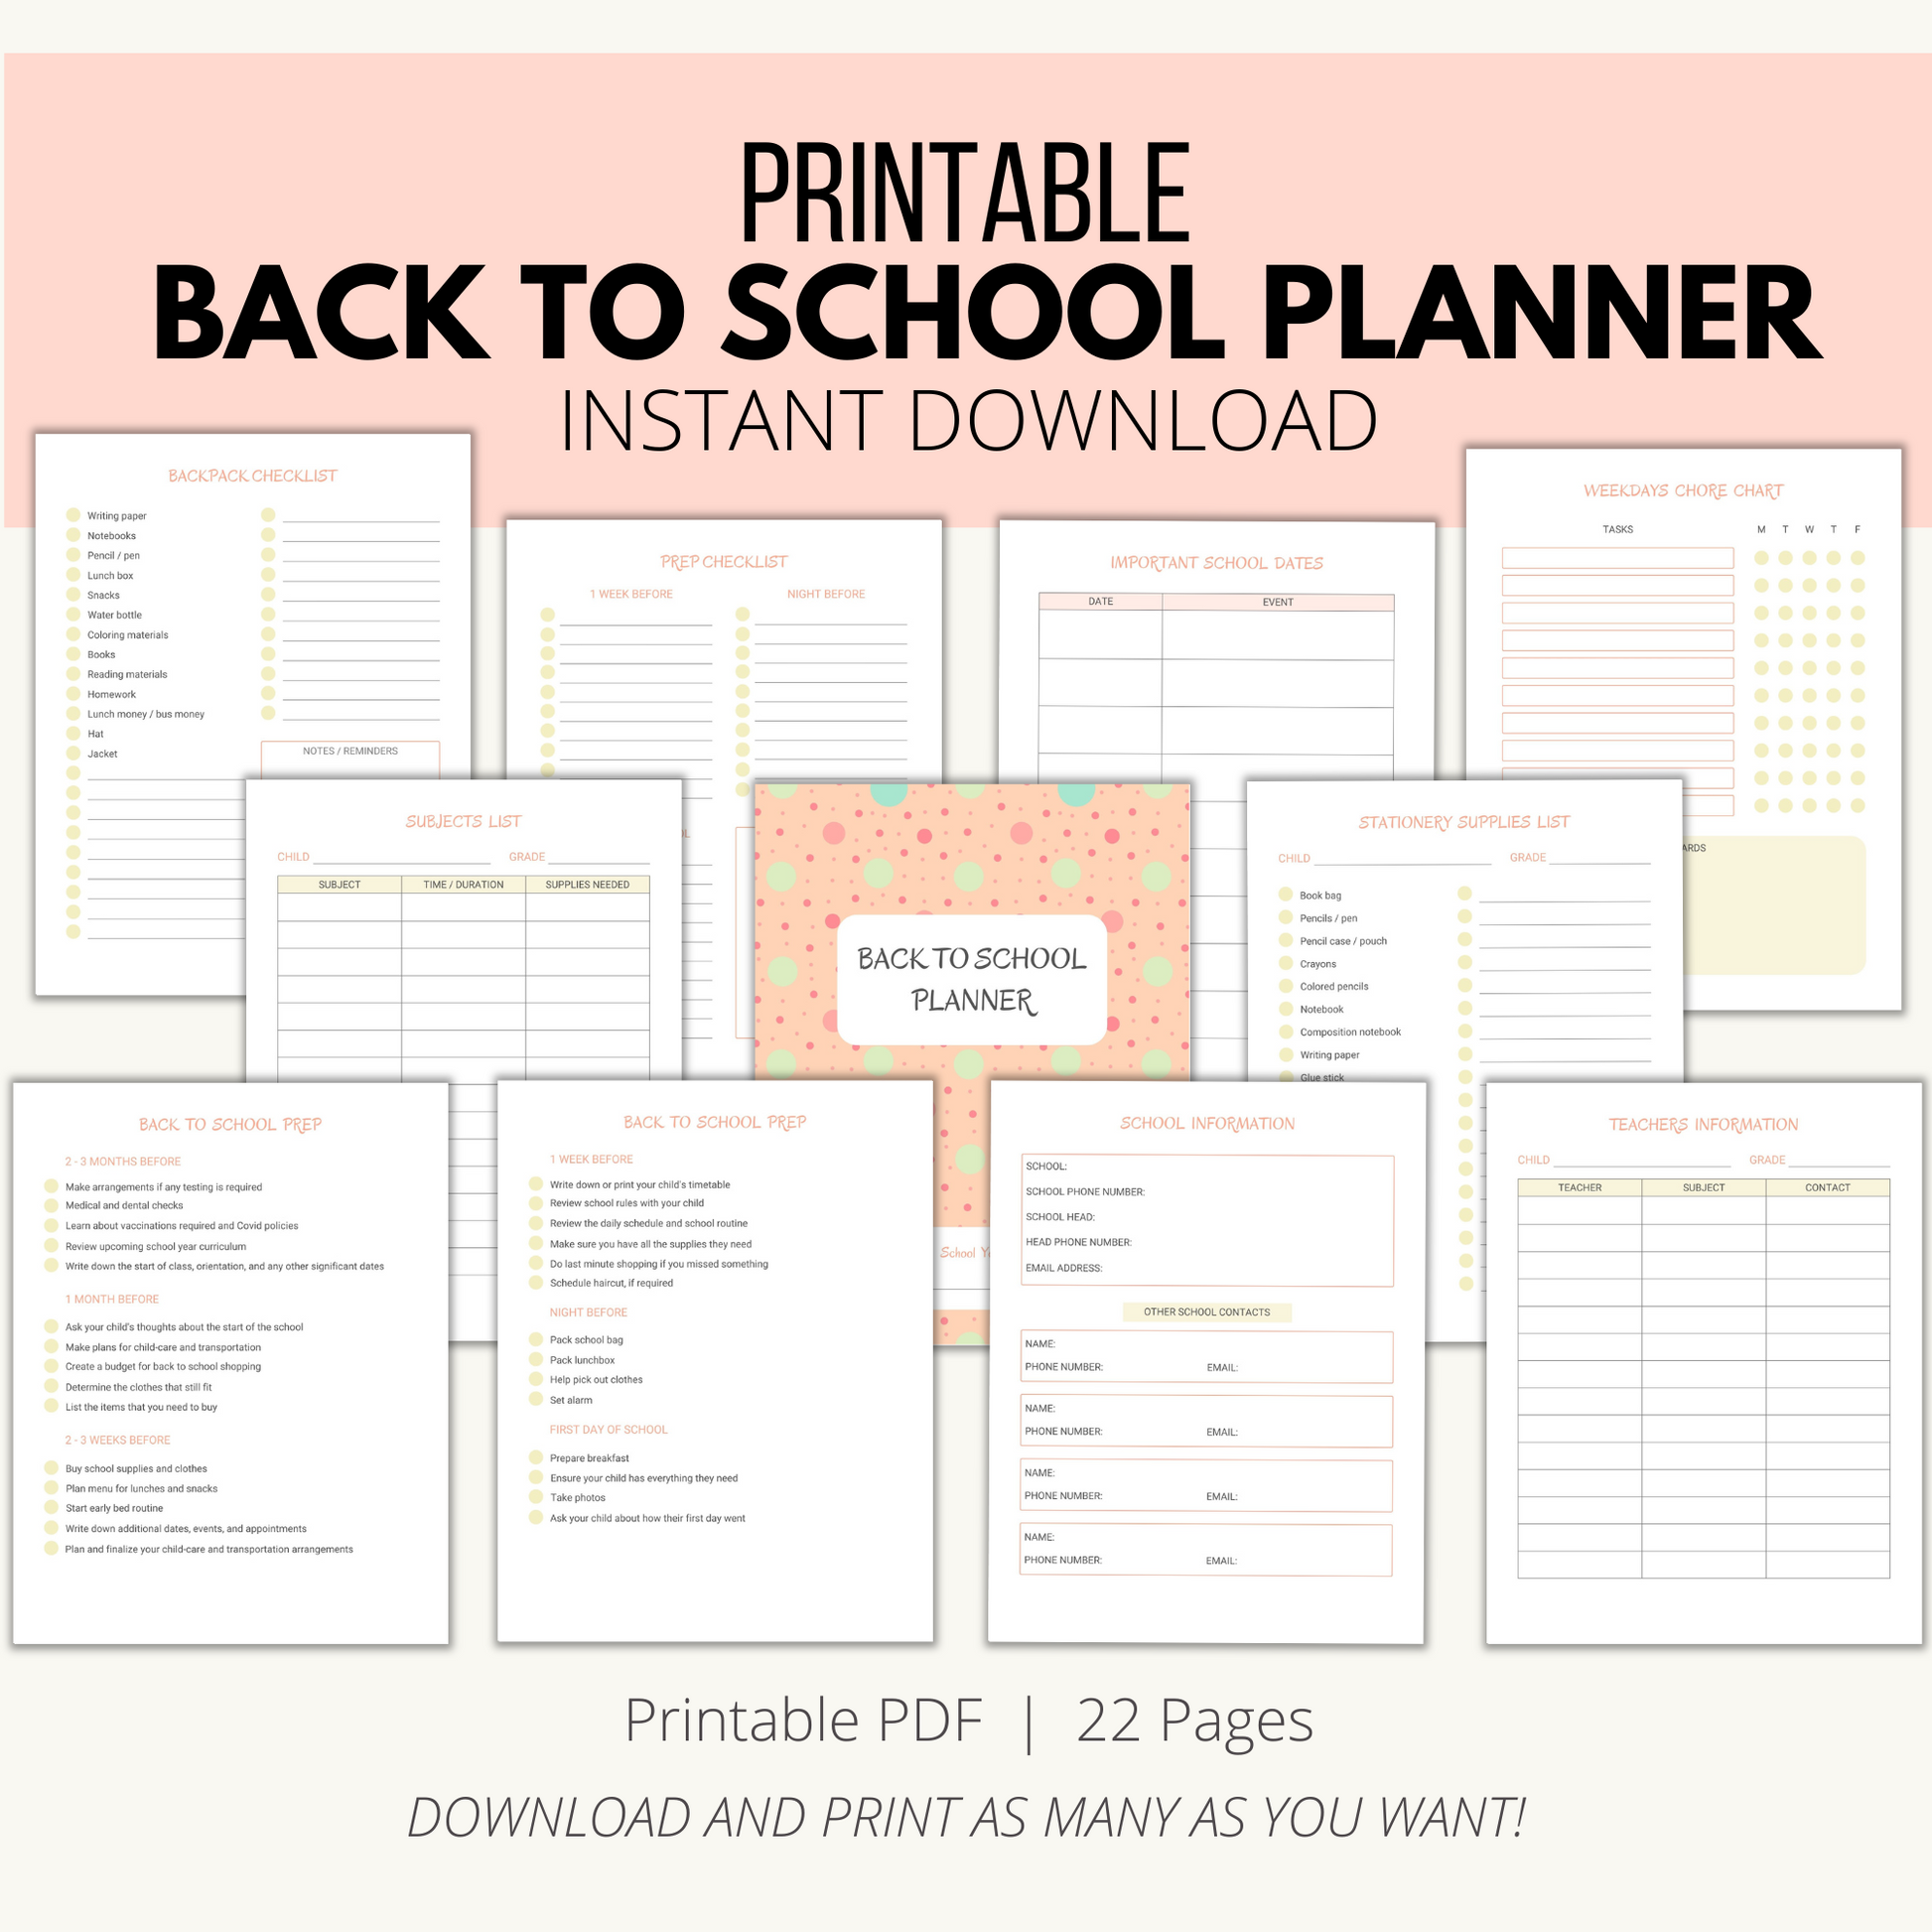 Printable Back to School Planner